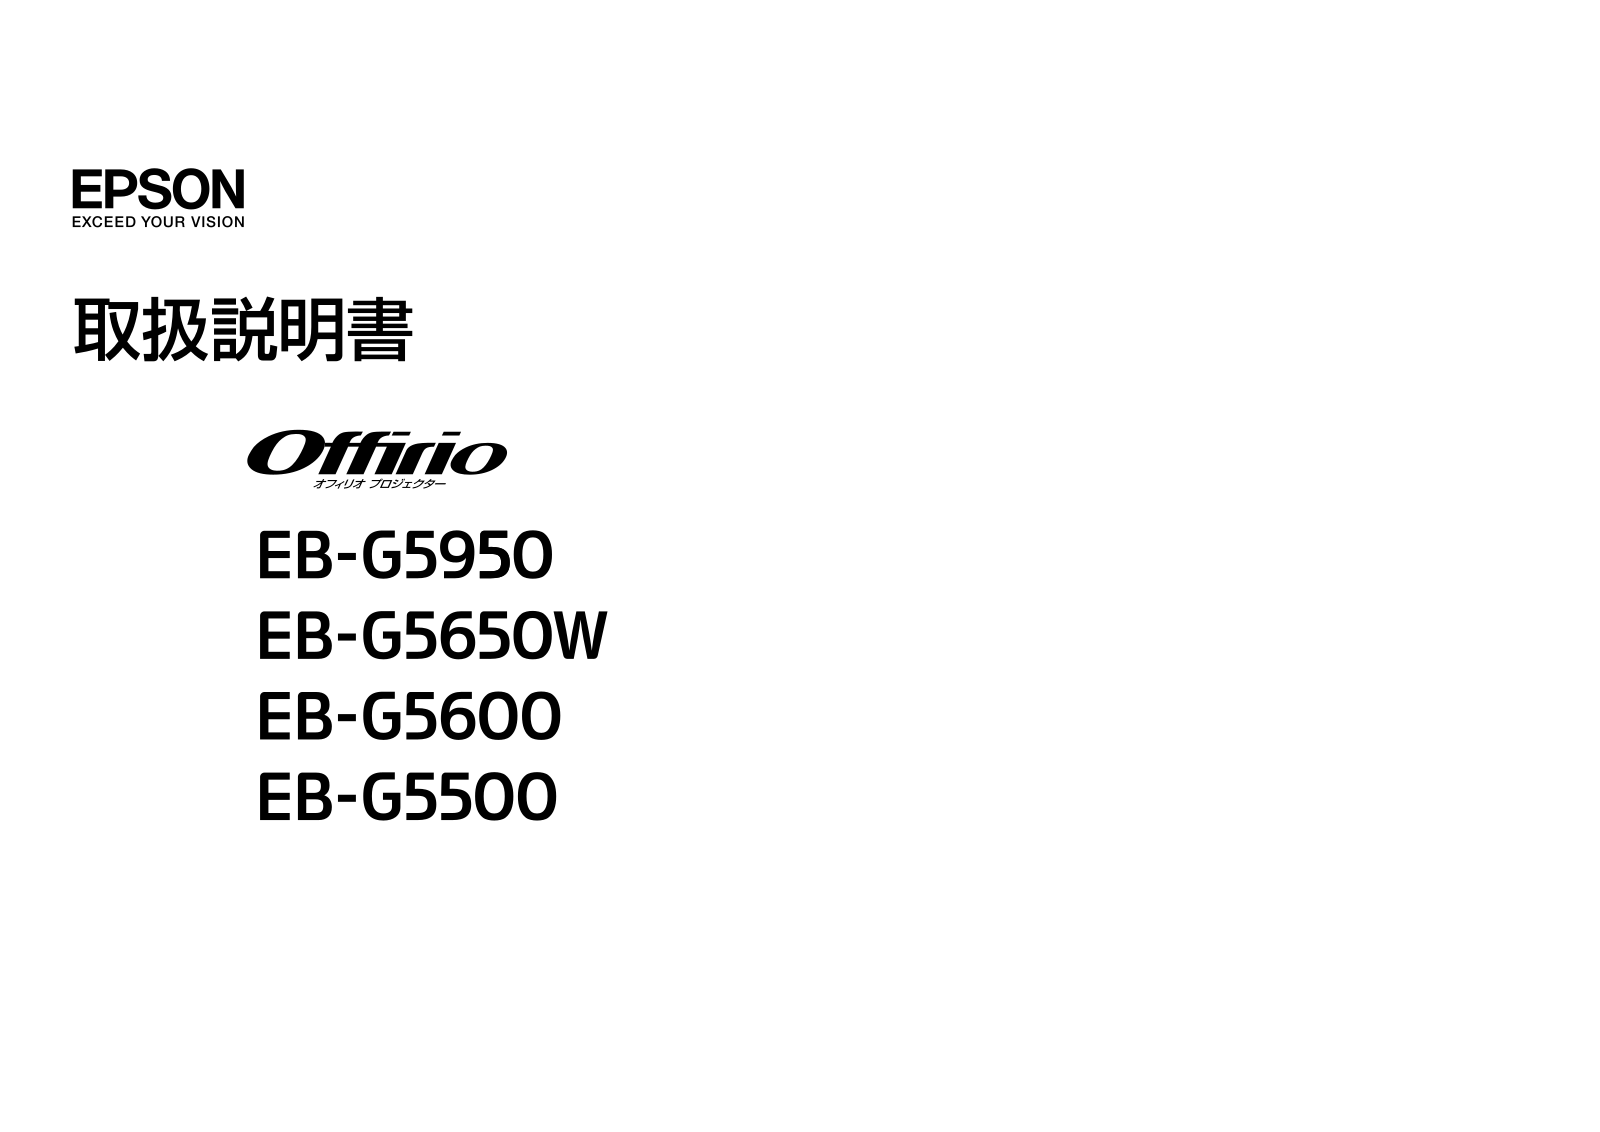 Epson EB-G5950, EB-G5650W, EB-G5600, EB-G5500 User Manual